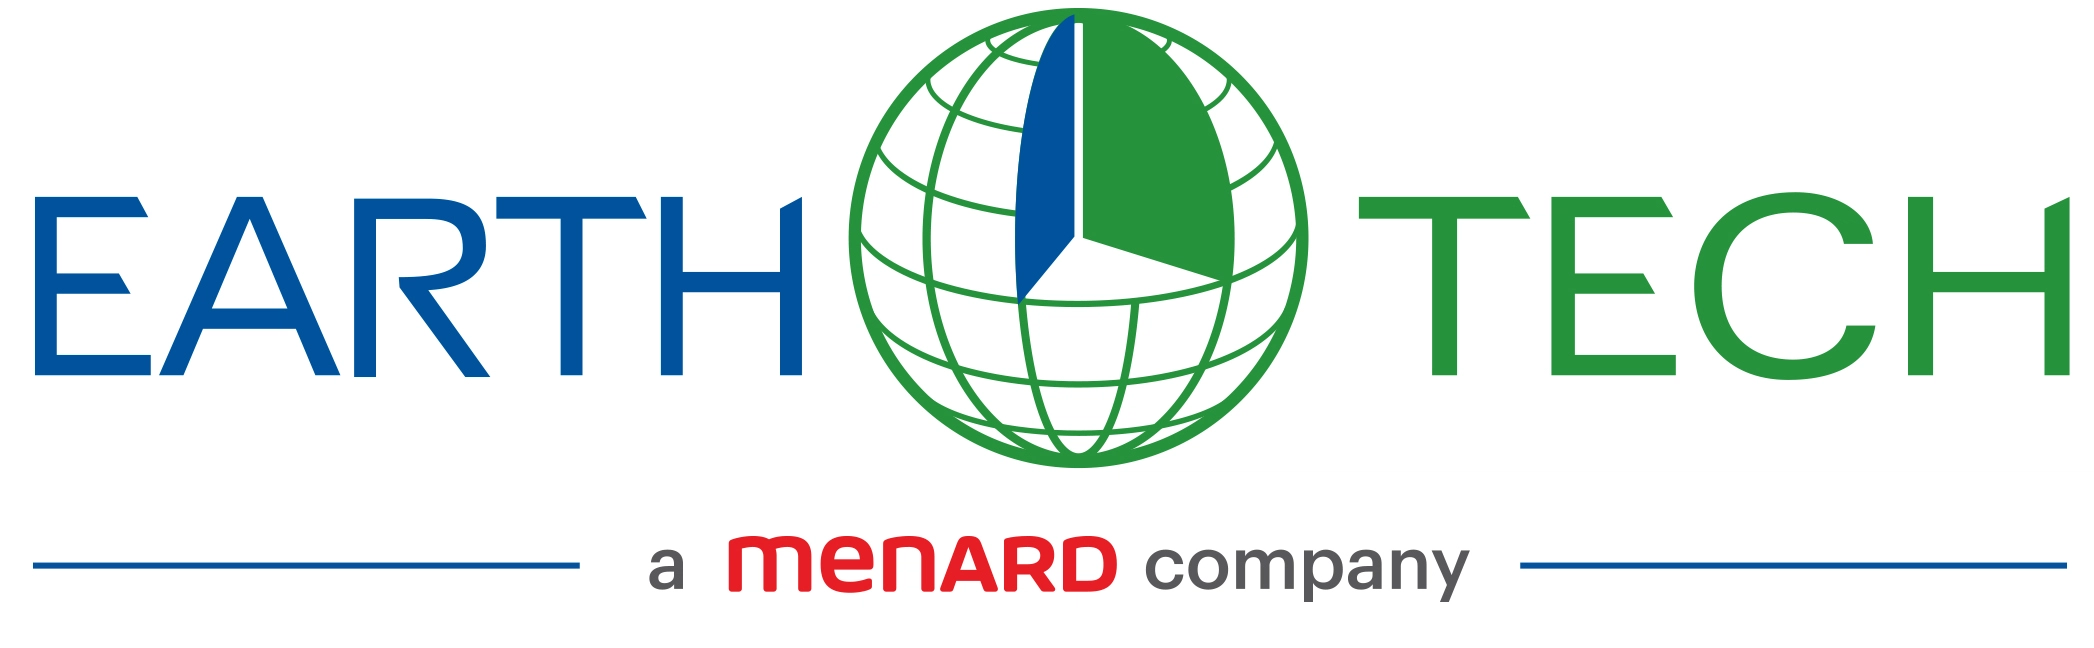 Earth Tech LLC Logo